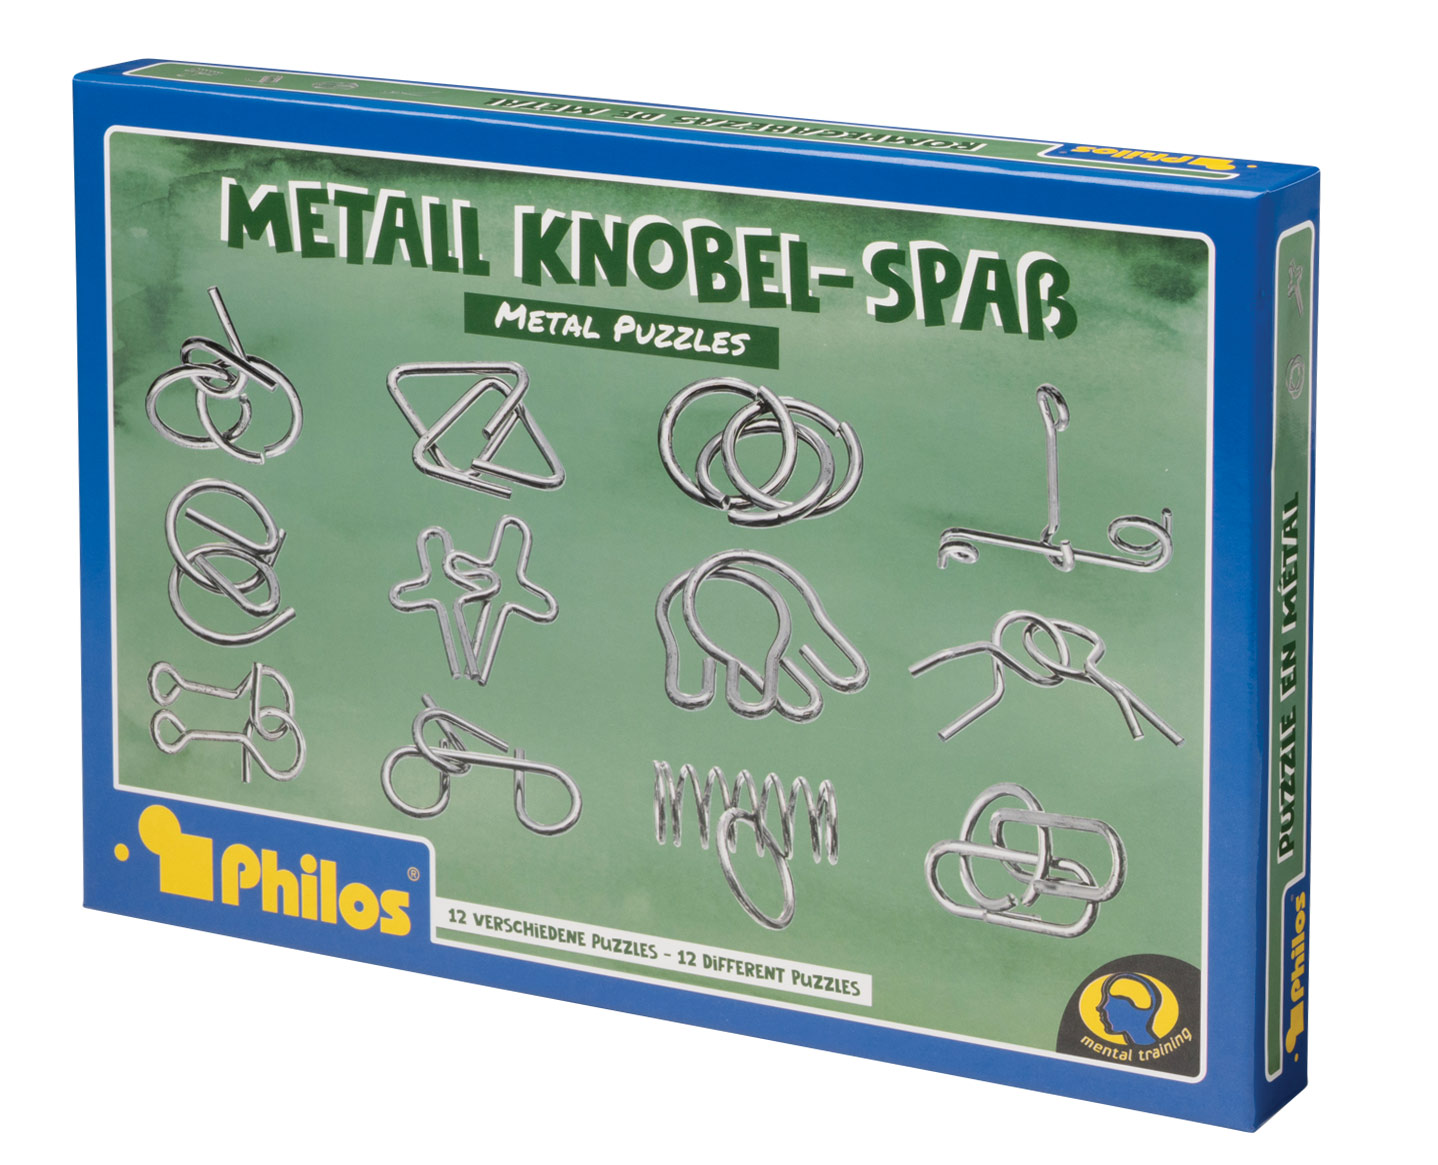 Metall Knobel Spass